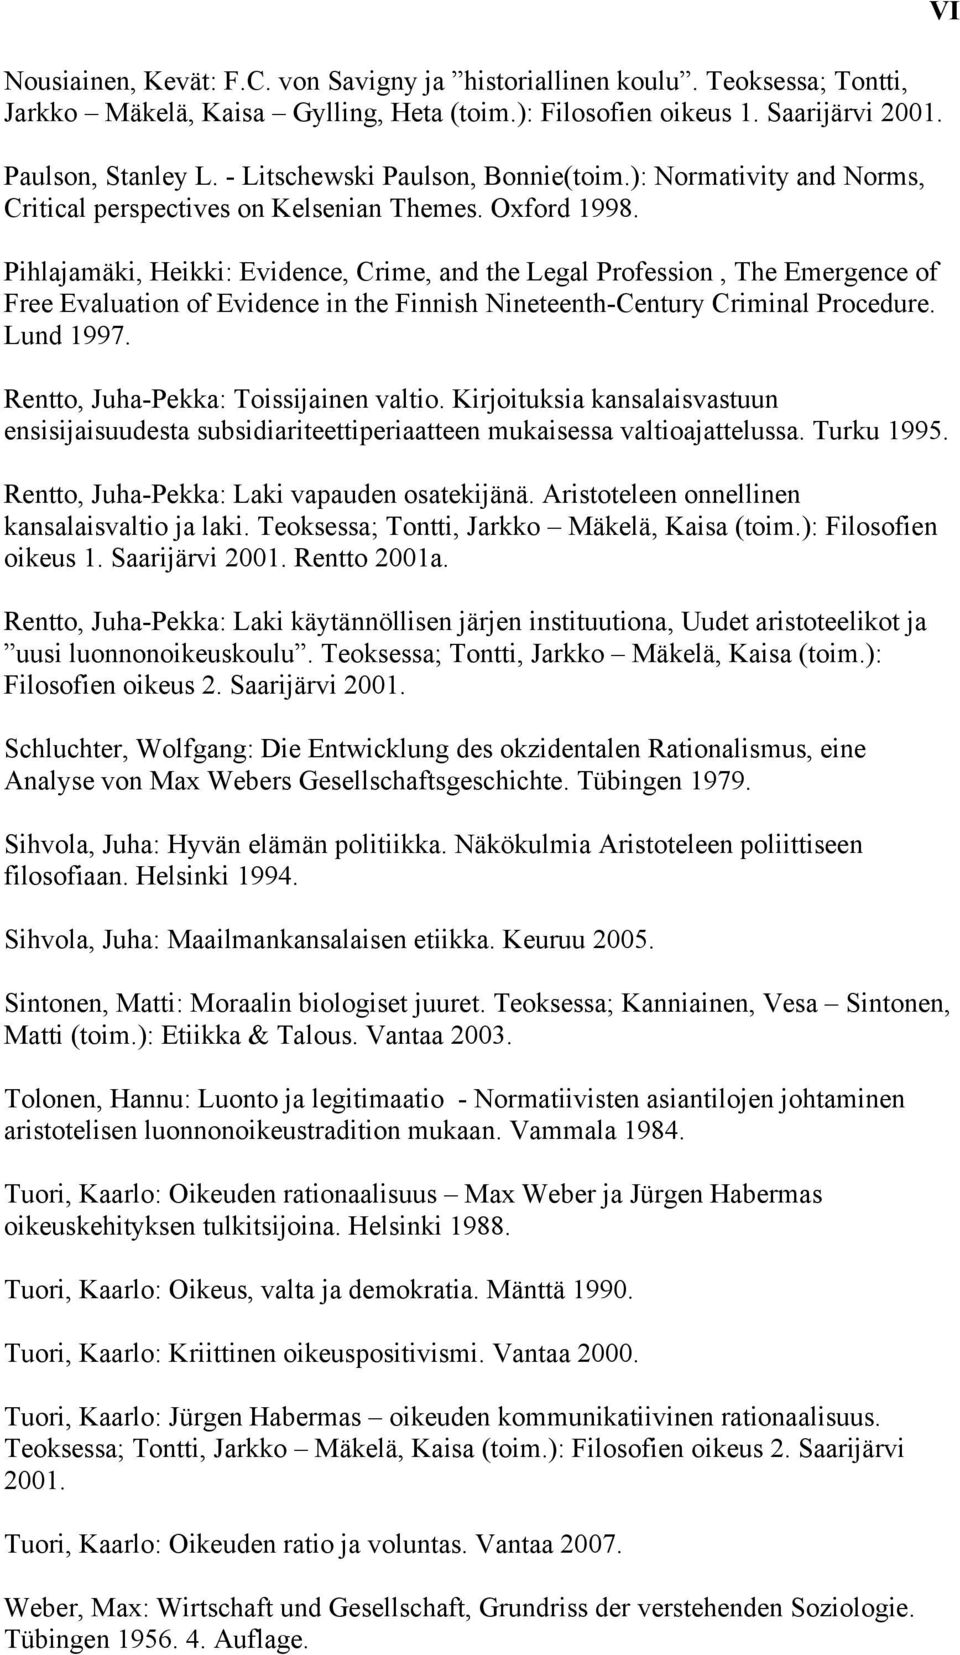 Pihlajamäki, Heikki: Evidence, Crime, and the Legal Profession, The Emergence of Free Evaluation of Evidence in the Finnish Nineteenth-Century Criminal Procedure. Lund 1997.